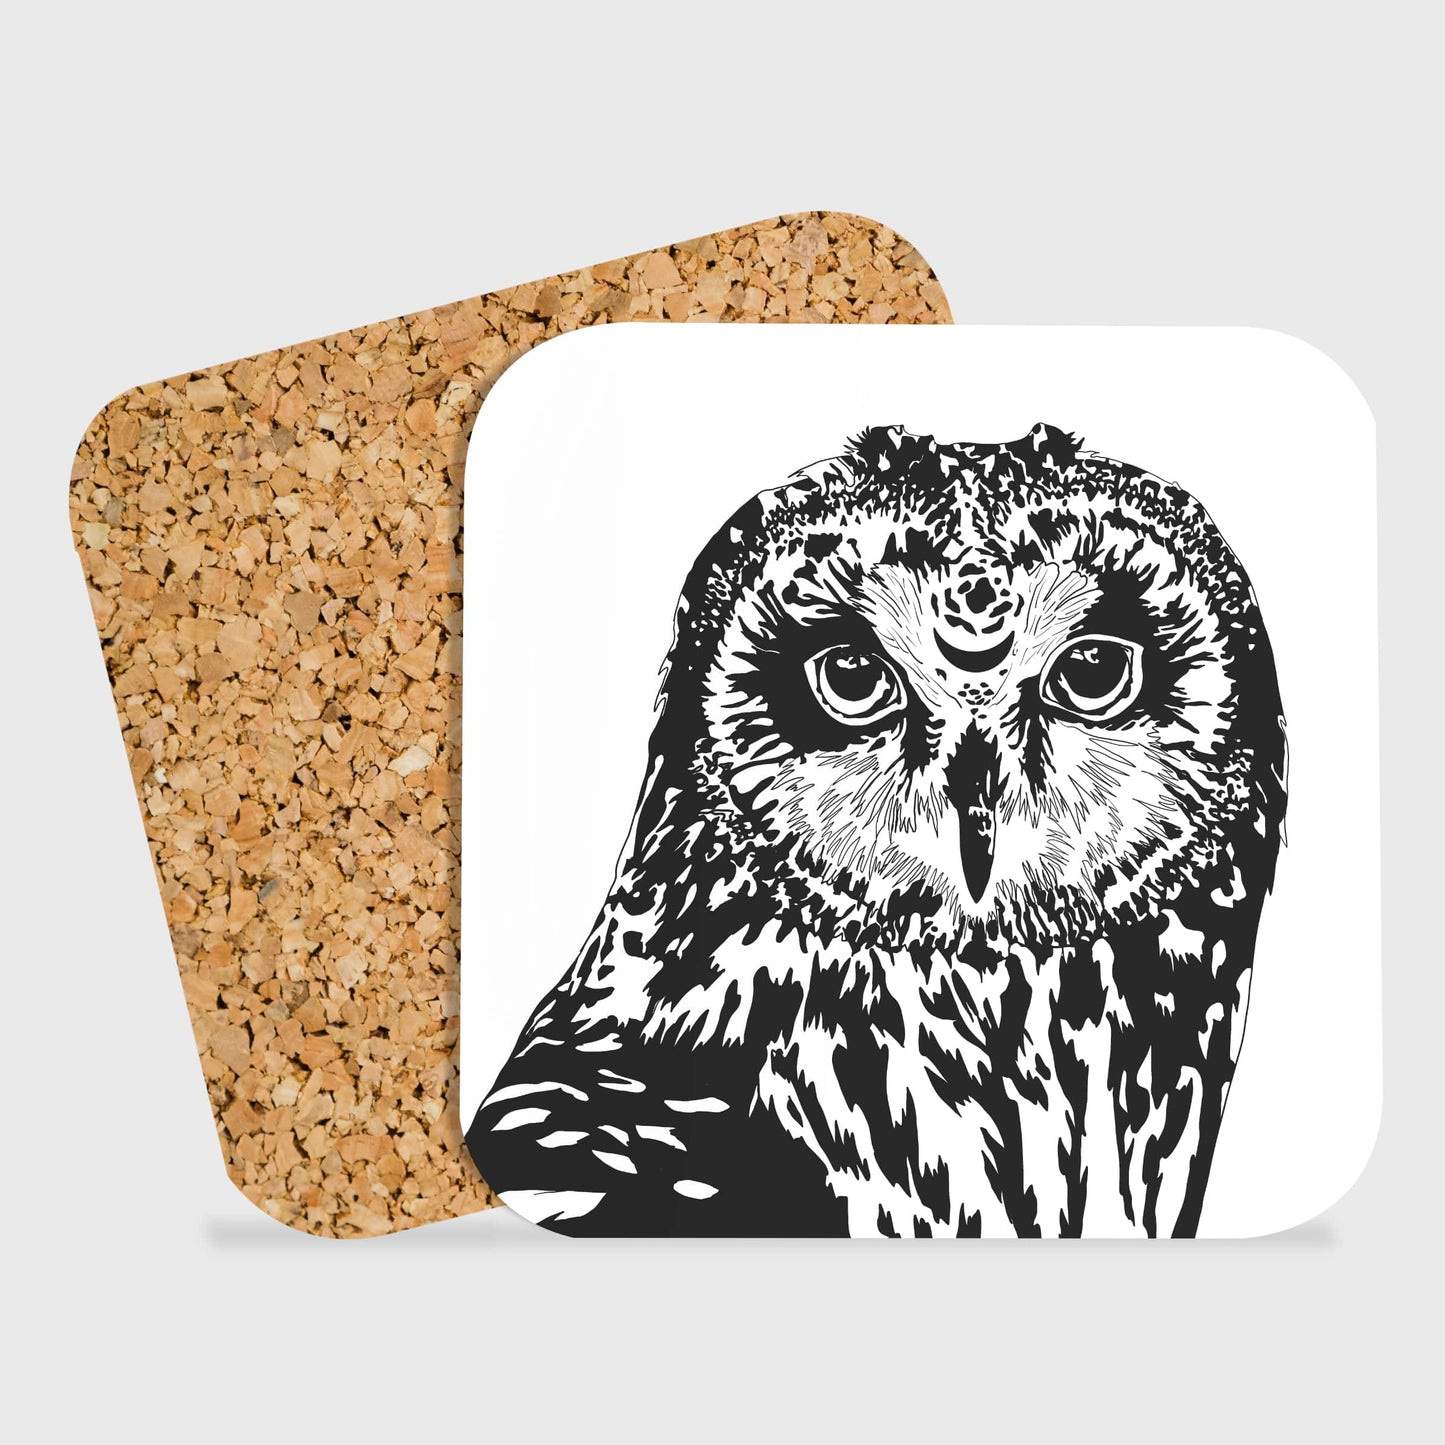 PinkPolish Design Coasters "Moon Owl" Drink Coaster